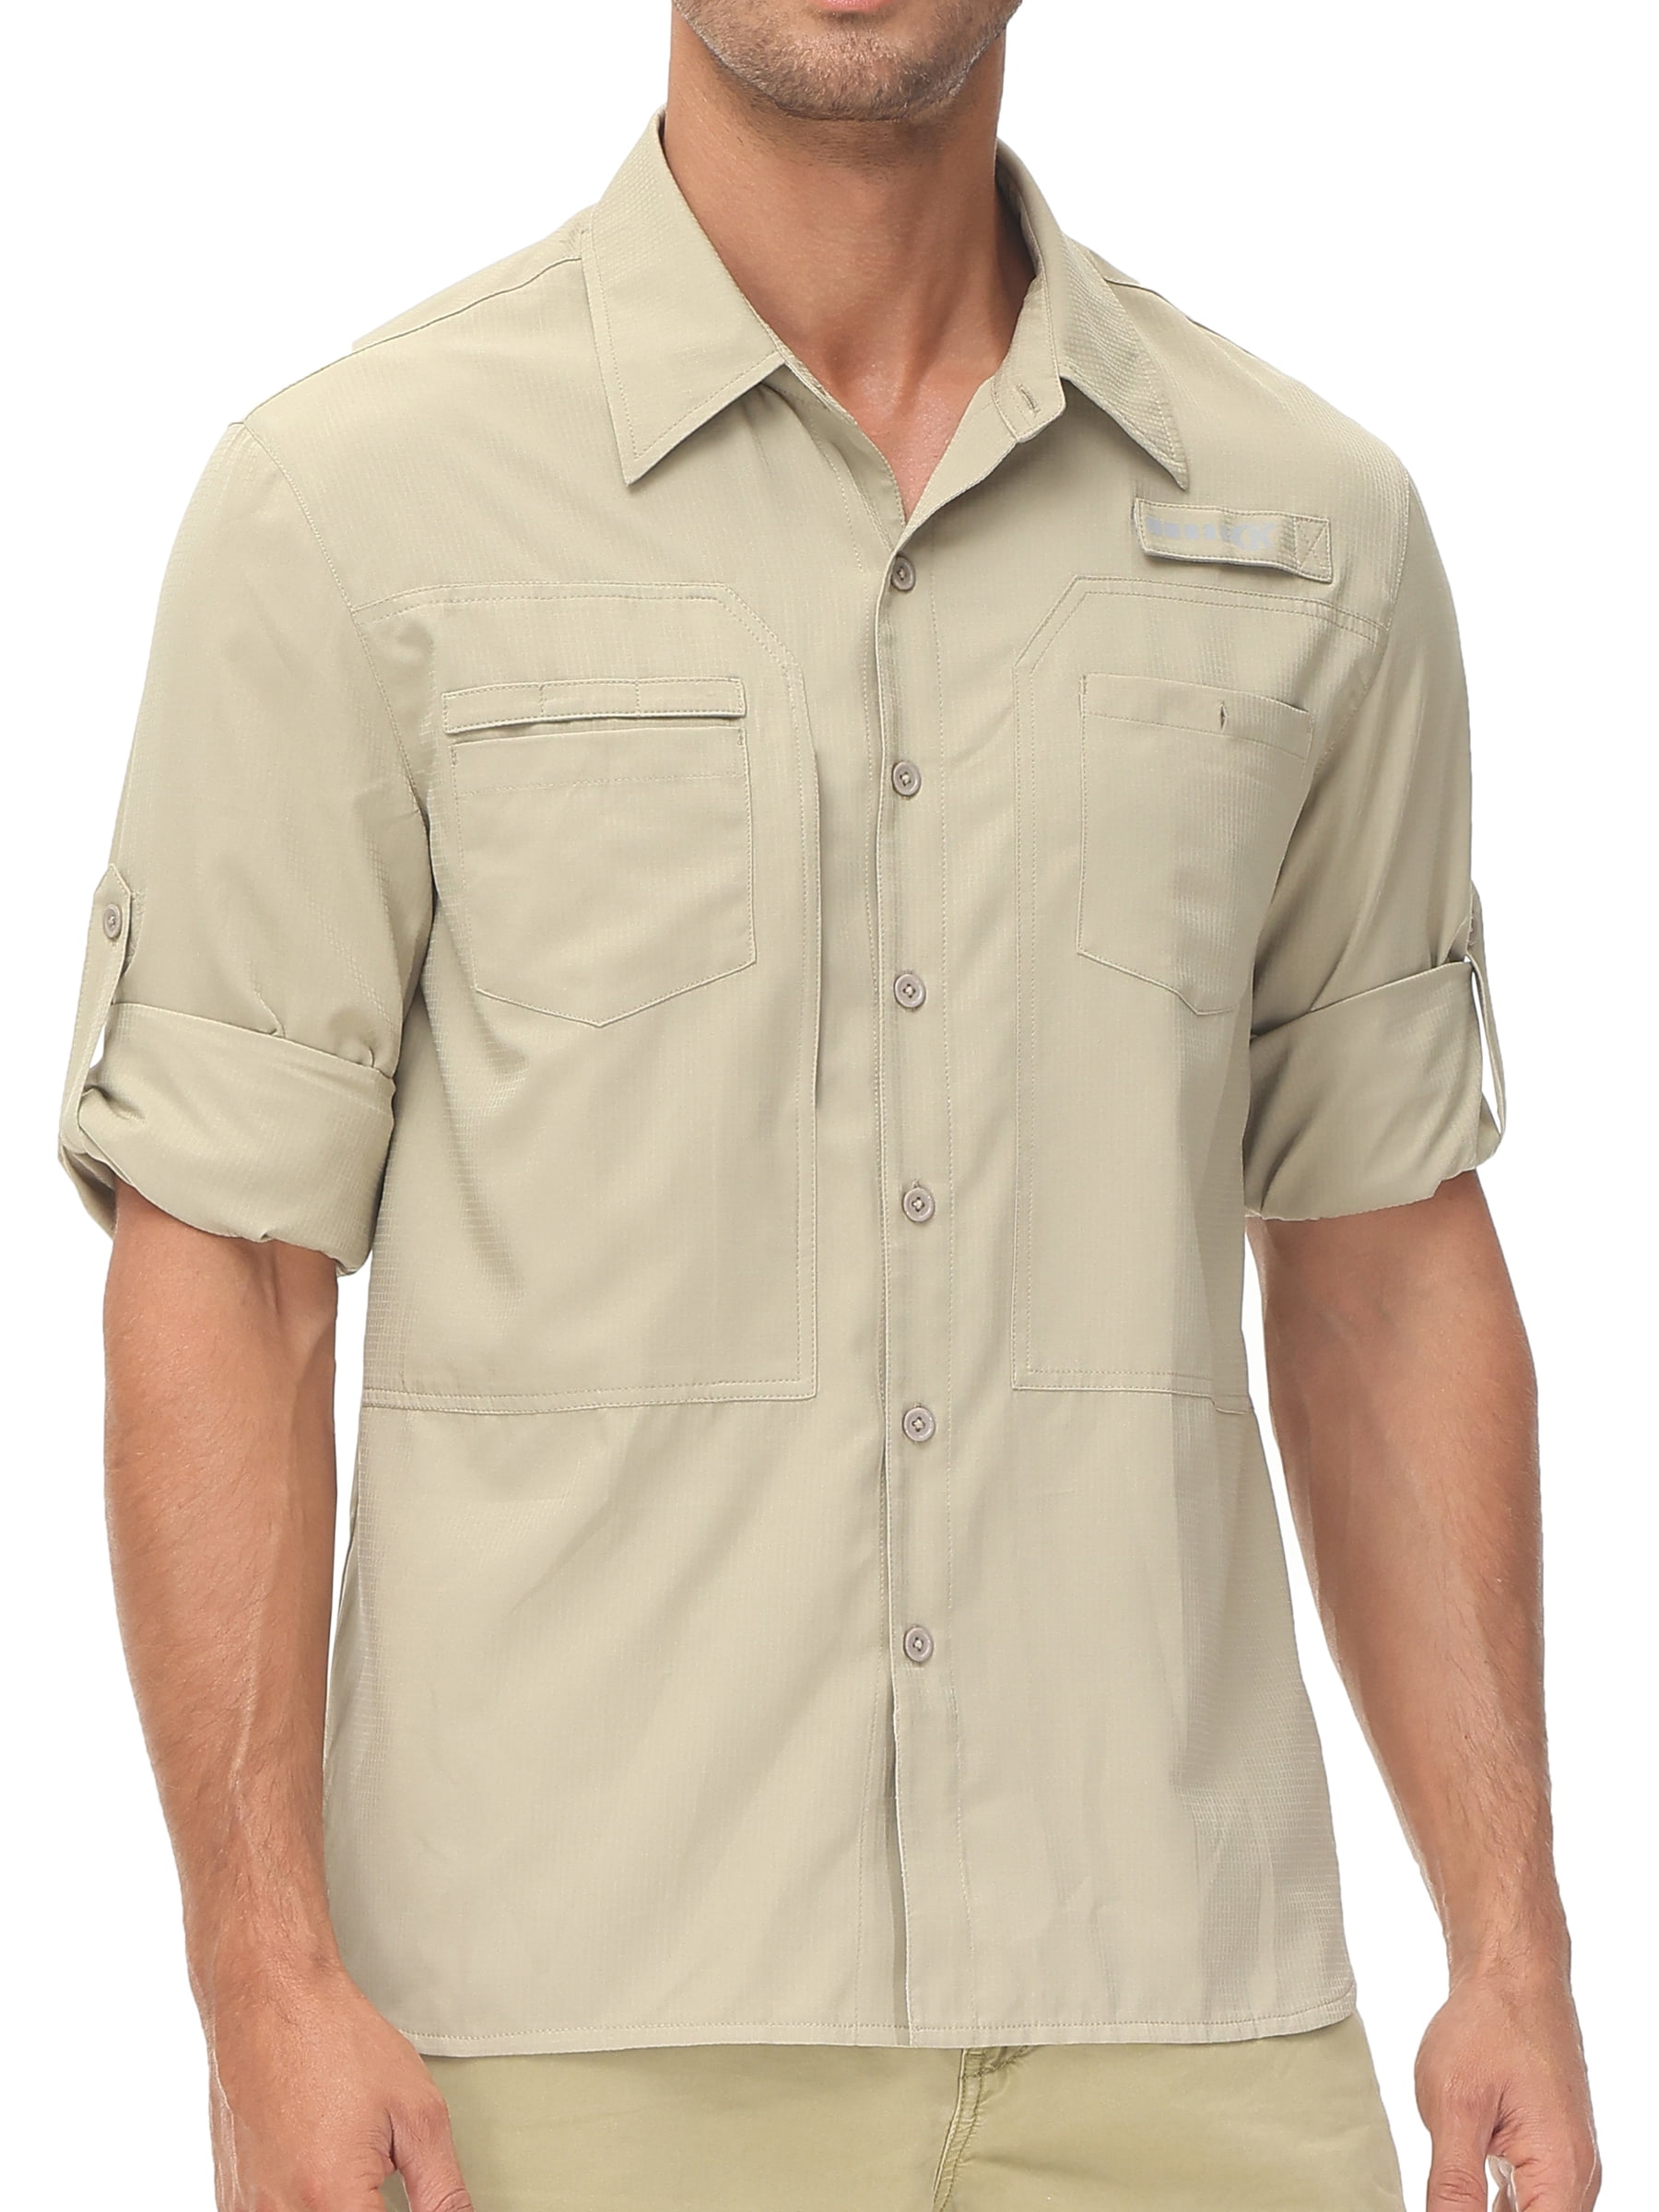 Pdbokew Men's Sun Protection Fishing Shirts Long Sleeve Travel Work Shirts  for Men UPF50+ Button Down Shirts with Zipper Pockets Khaki 2XL 